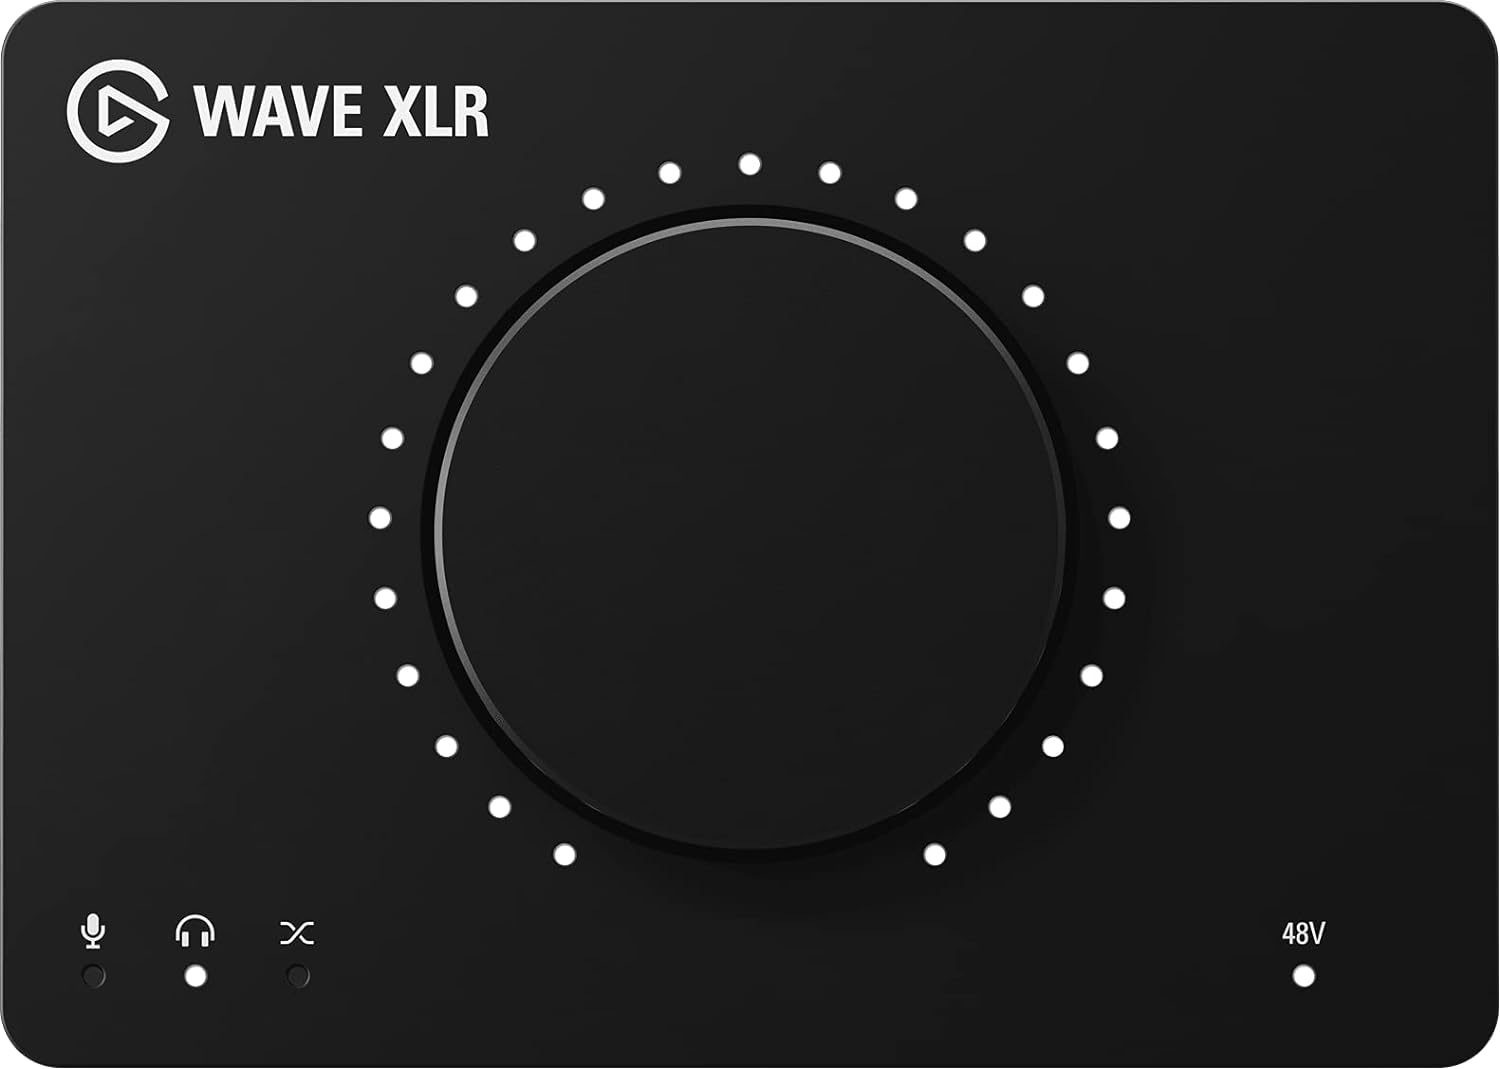 Elgato Wave XLR Audio Mixer 75 db Preamp 48V Phantom Power